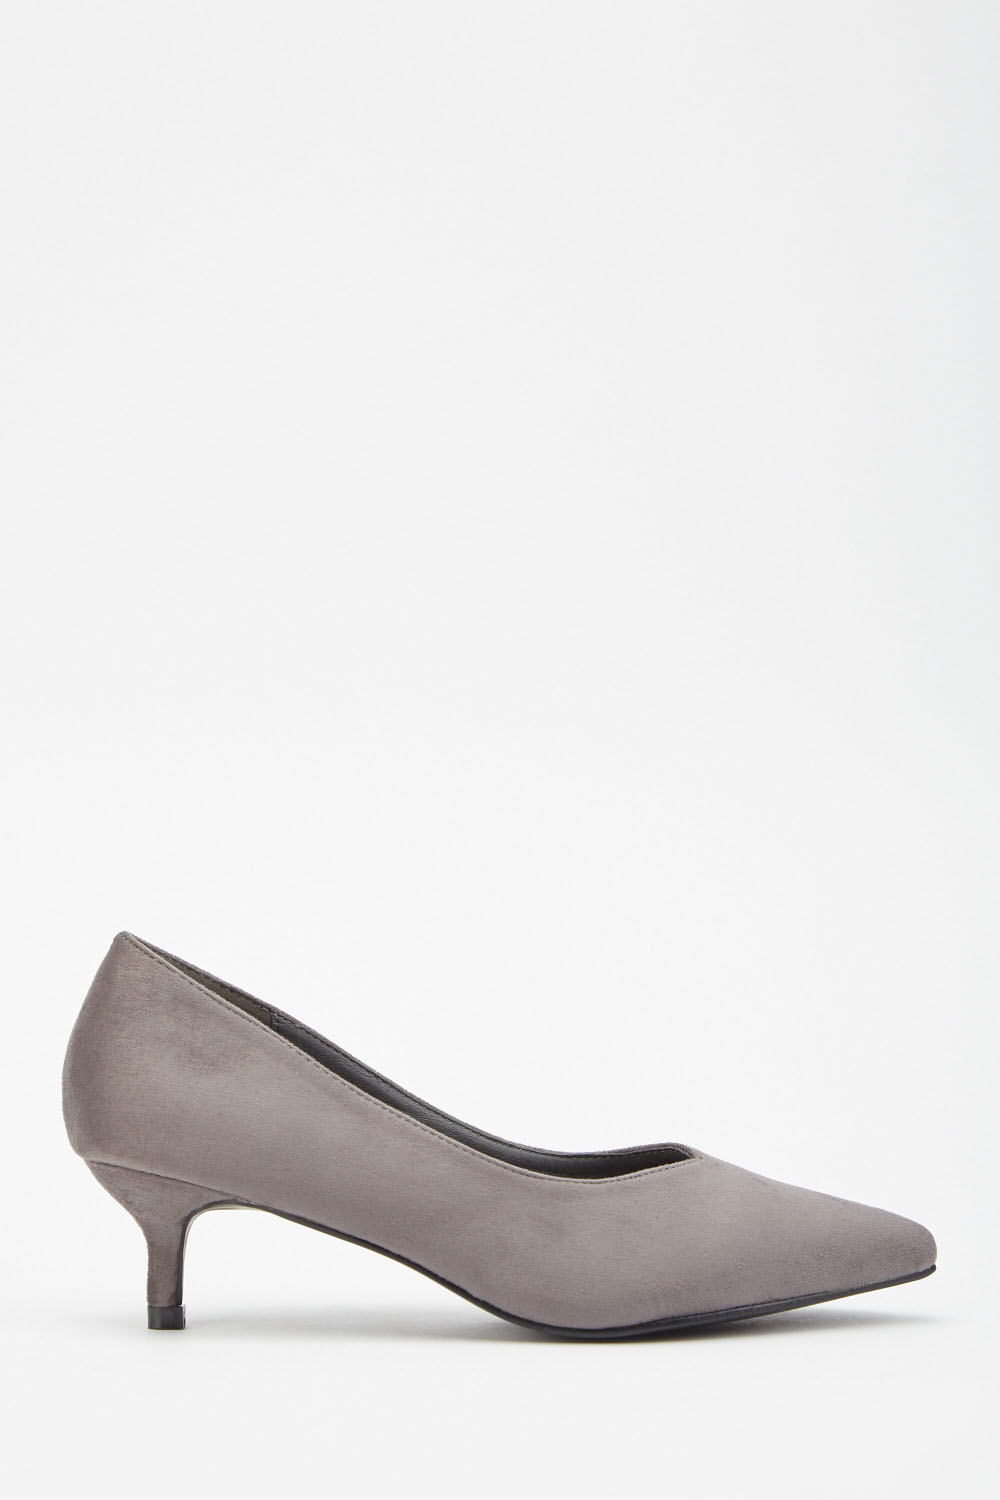 grey court shoes low heel authentic 